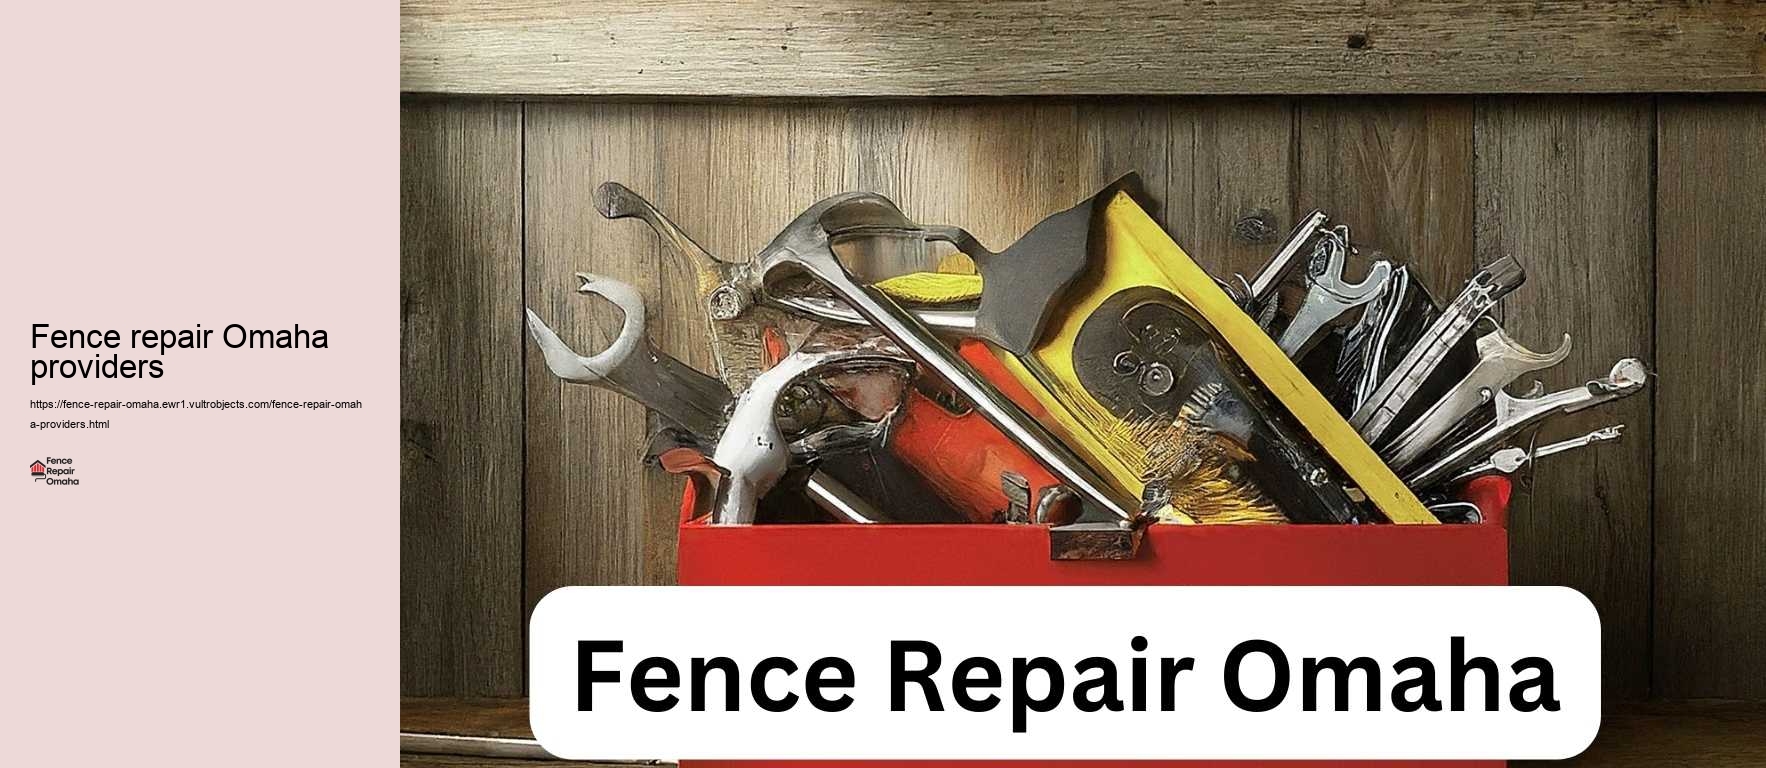 Fence repair Omaha providers